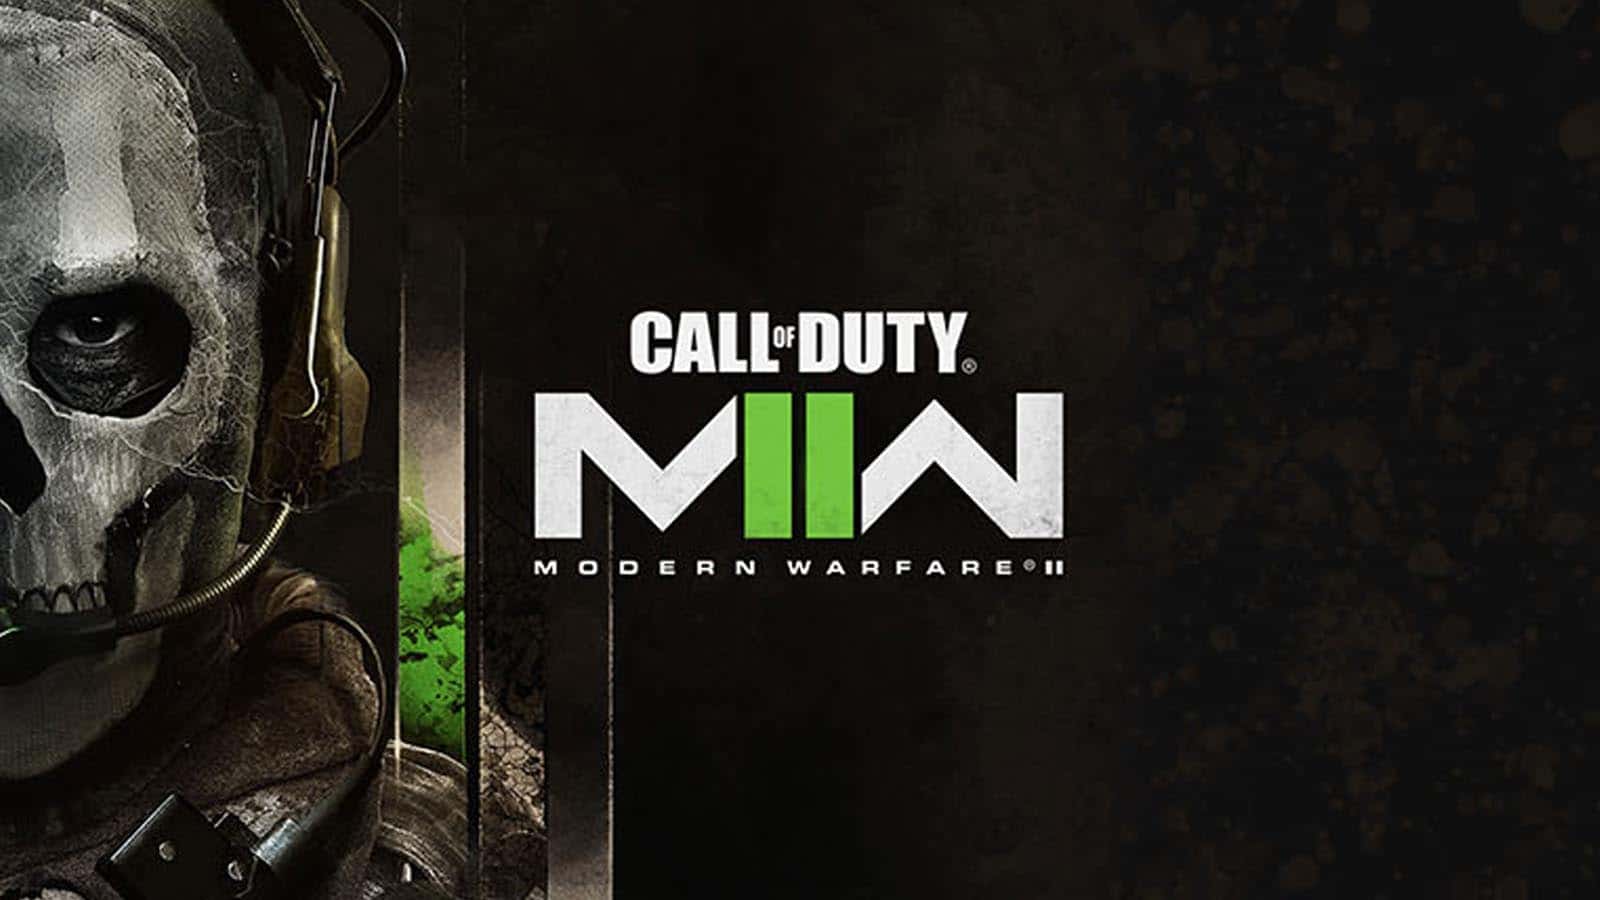 Download Call of Duty: Modern Warfare II PlayStation 4 Game Full Setup